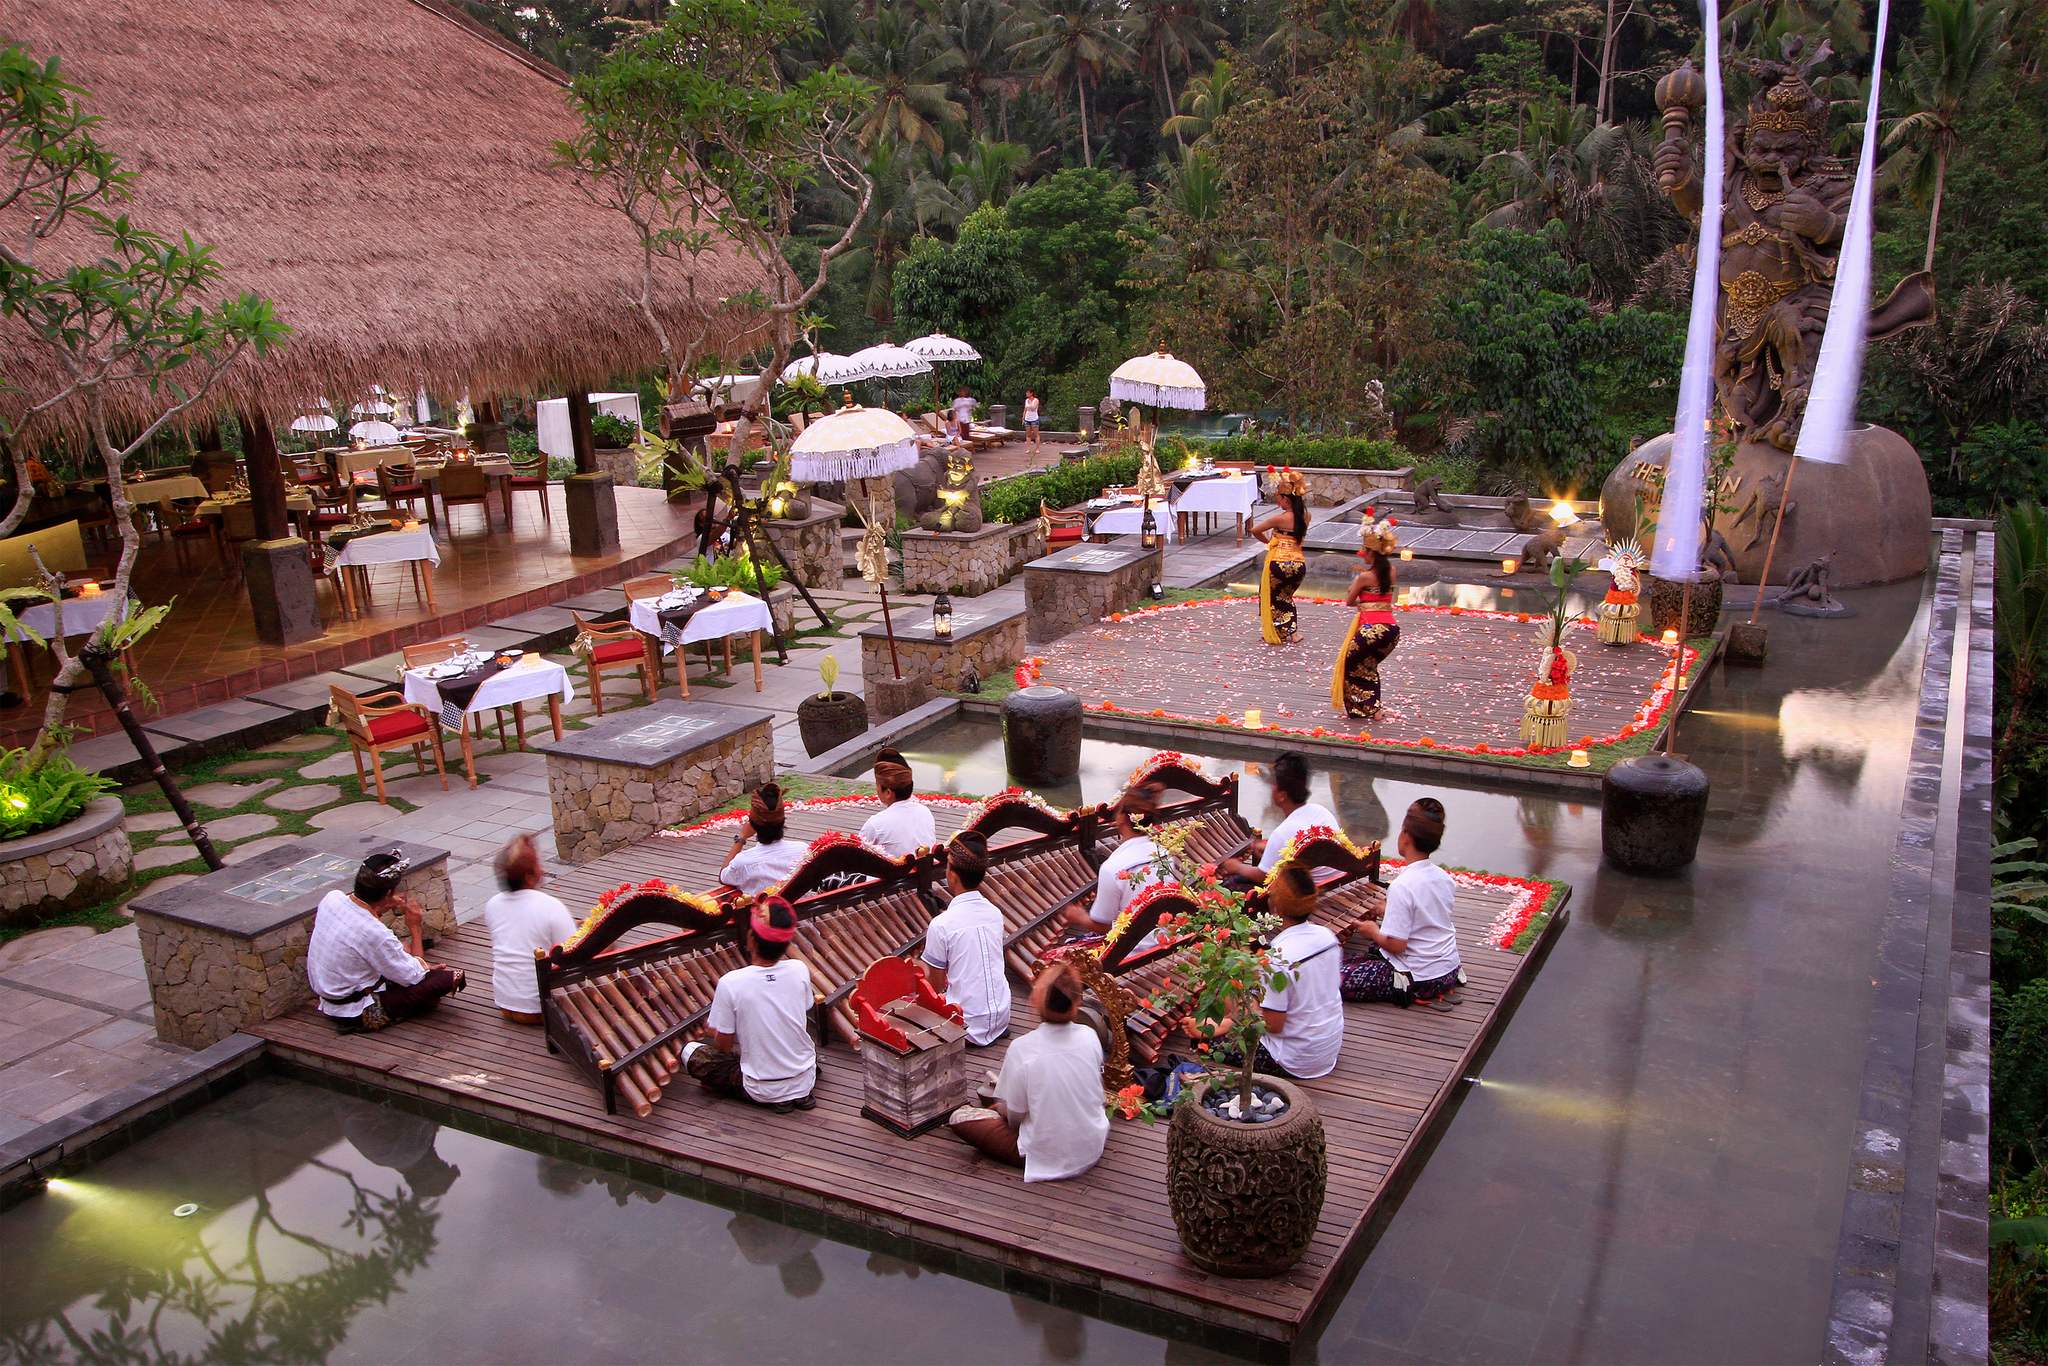 Balinese Culture Dinner